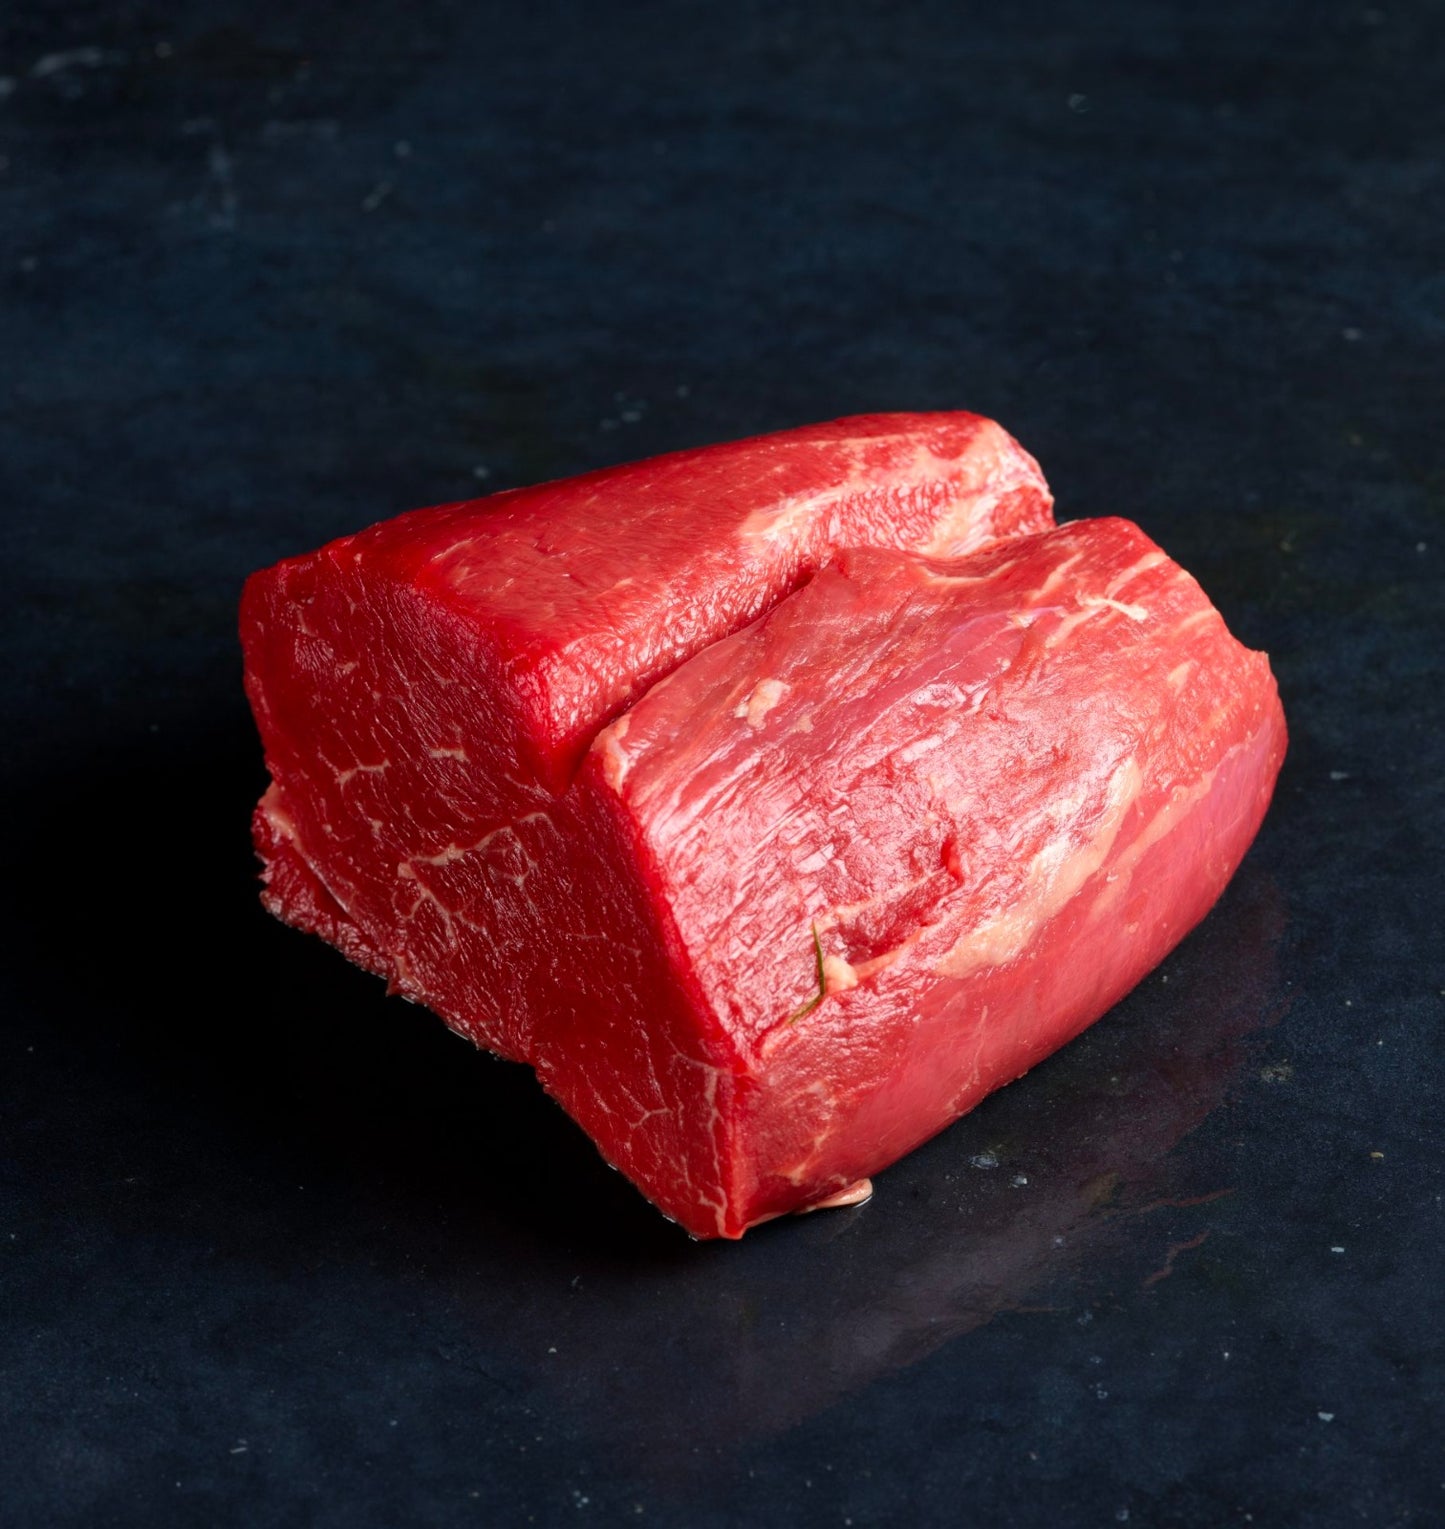 Natural Grass Fed Beef, Premium Chateaubriand Steak